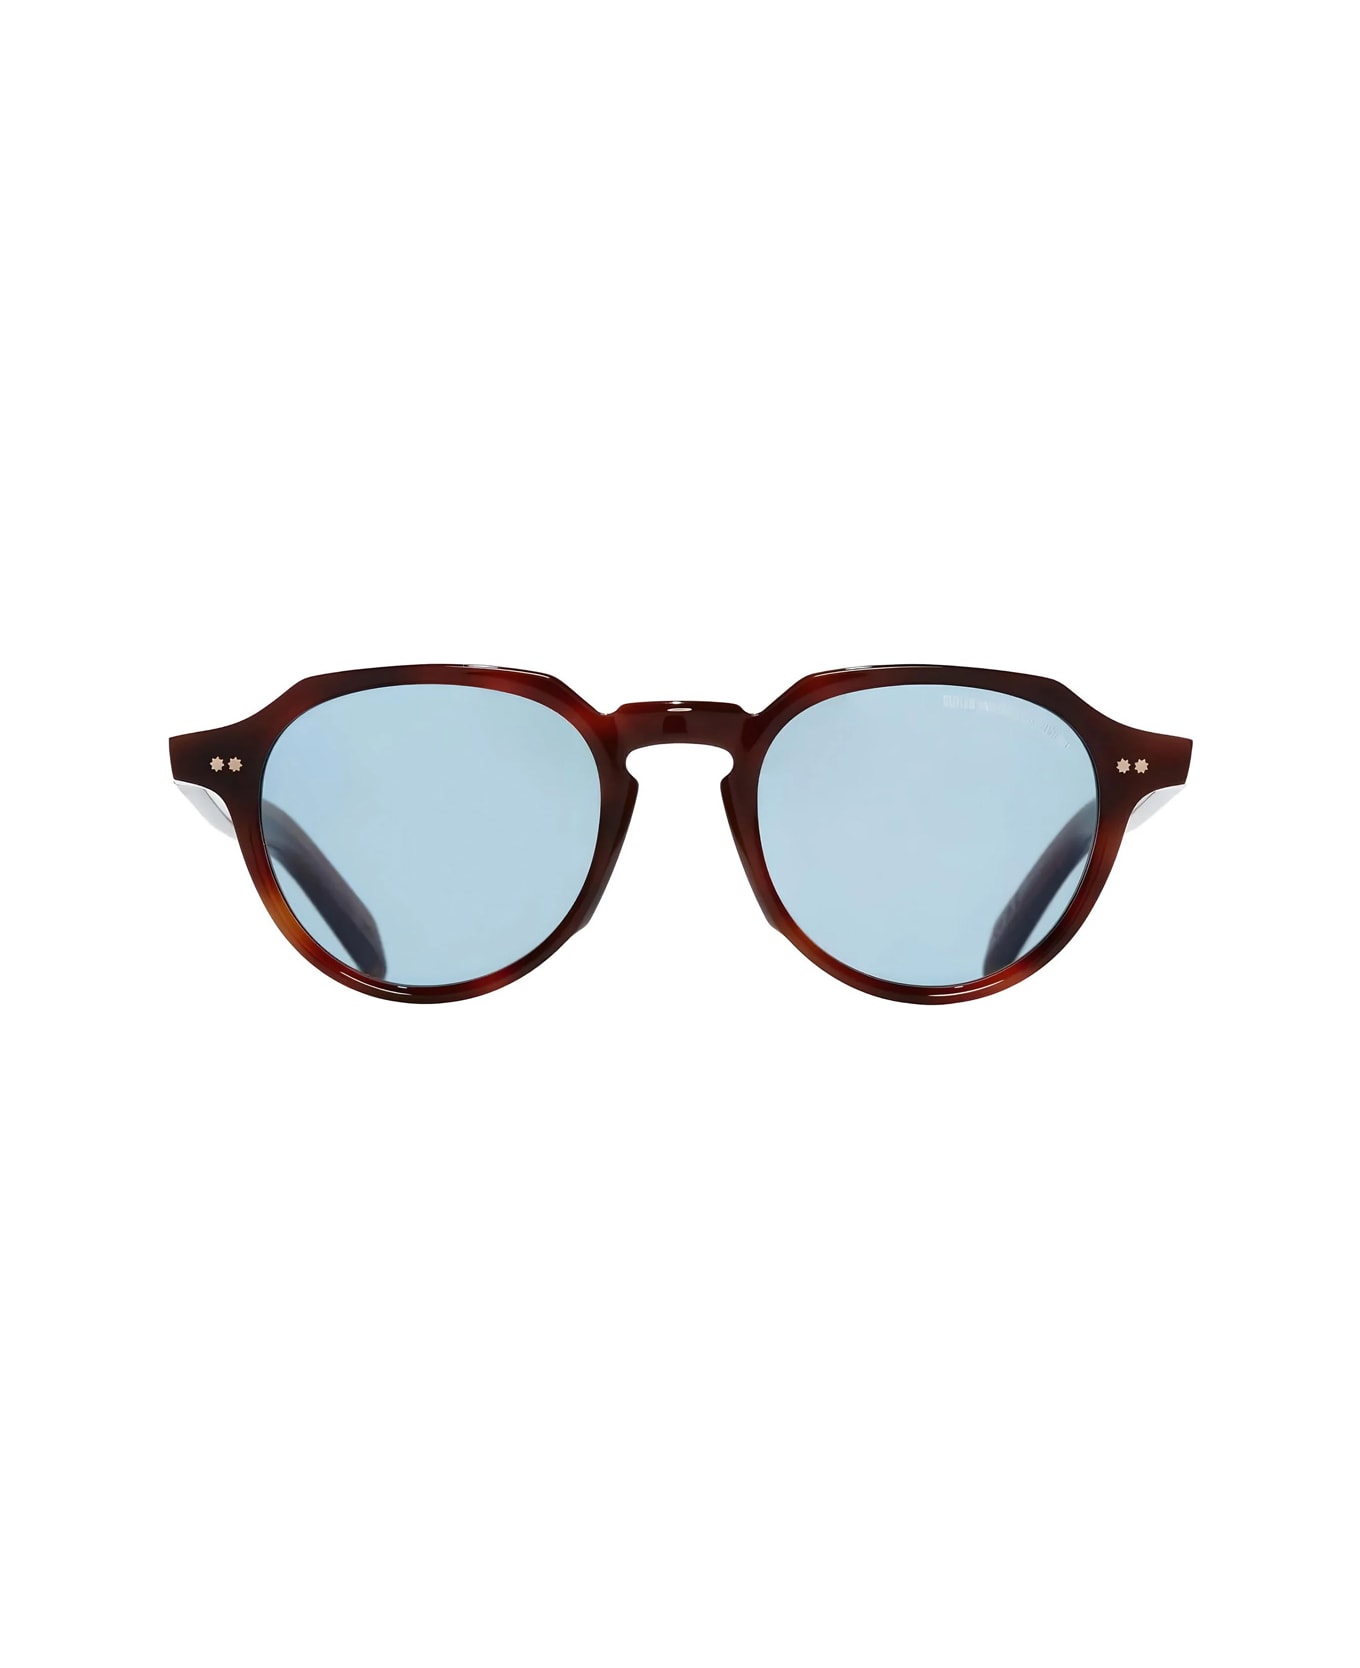 Cutler and Gross Gr06 02 Vintage Sunburst Sunglasses - Marrone